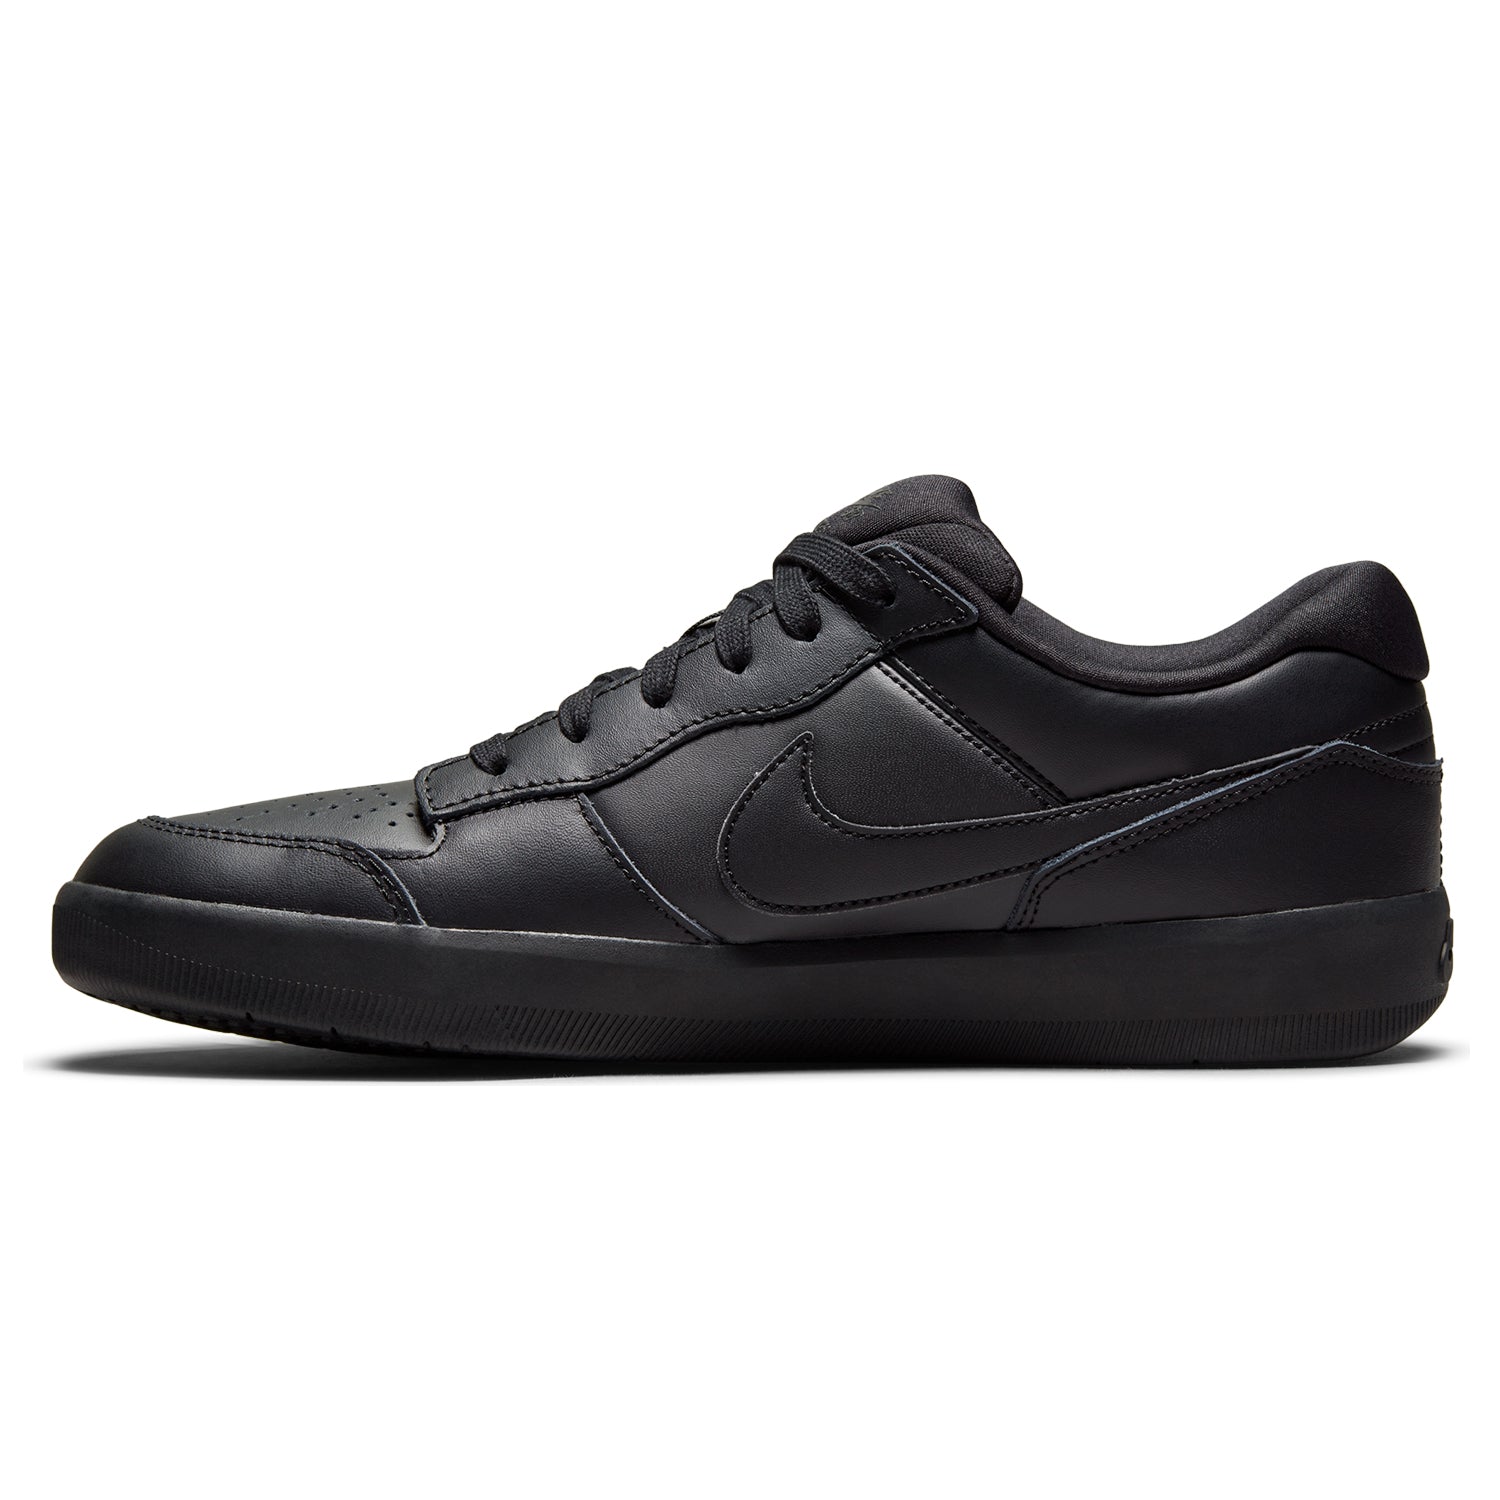 Nike SB Force 58 Premium Leather Black/Black Orchard Skateshop